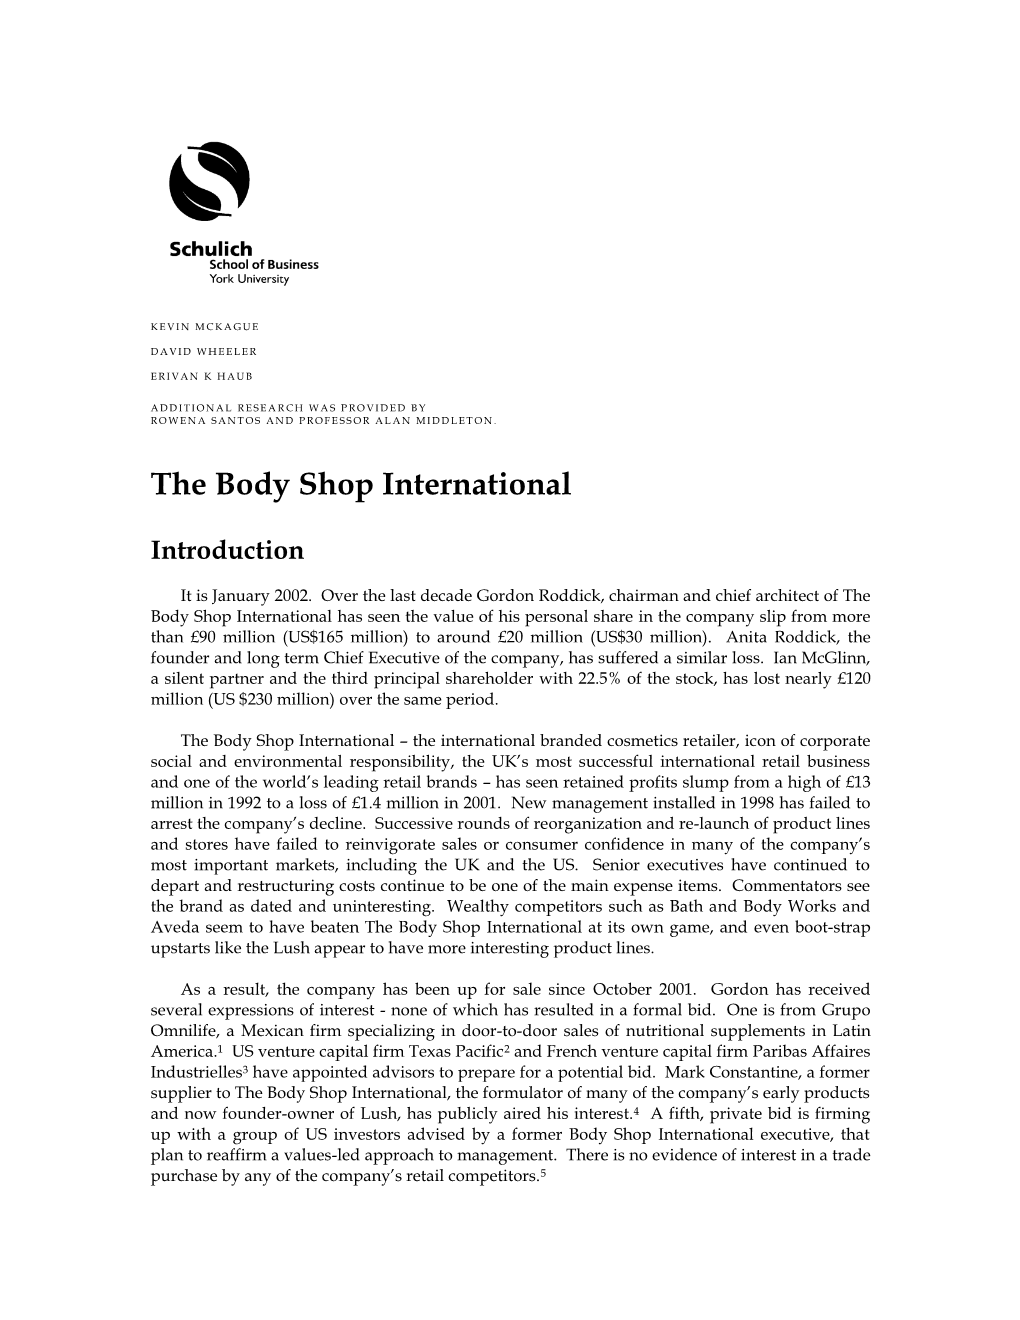 The Body Shop International